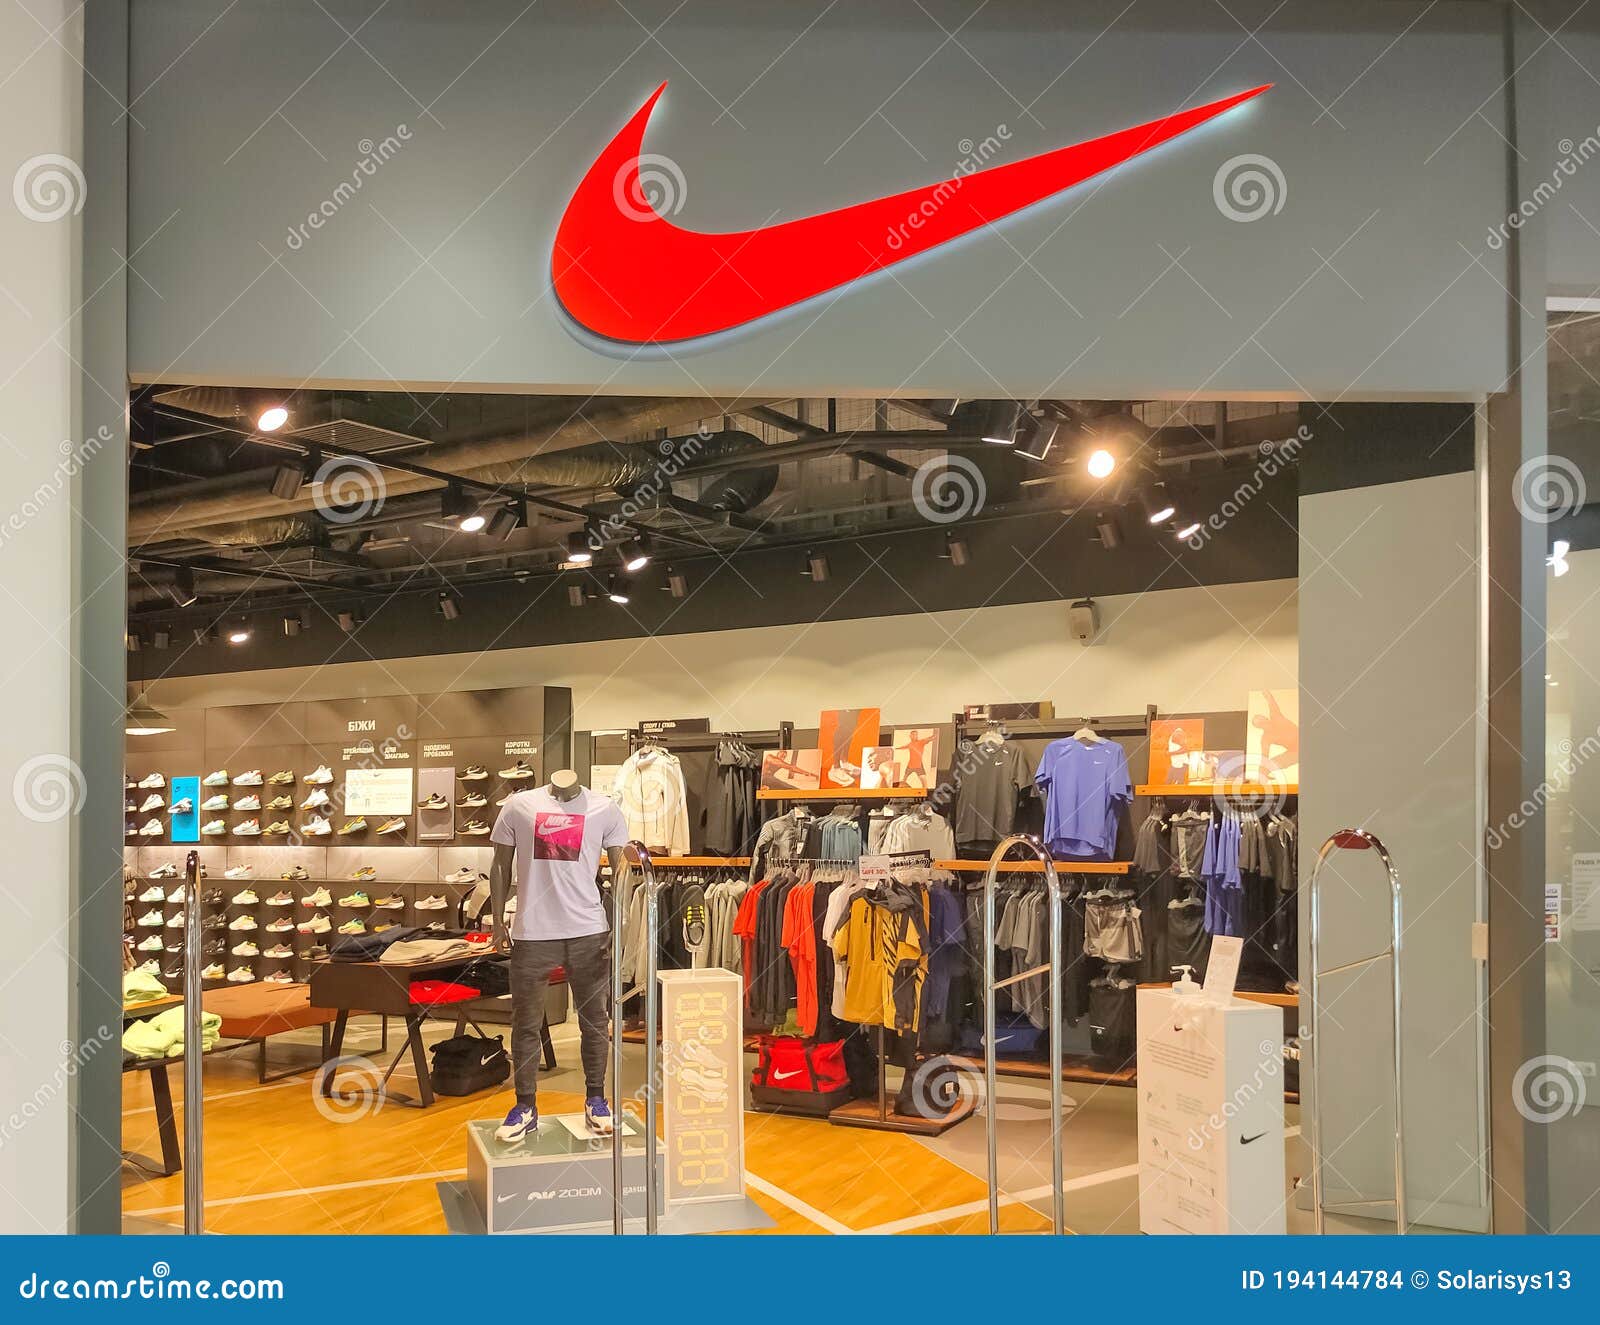 Kiyv, Ukraine - August 2, 2020: Nike Store at Kiyv, Ukraine on August 2,  2020 Editorial Stock Image - Image of fashion, britain: 194144784